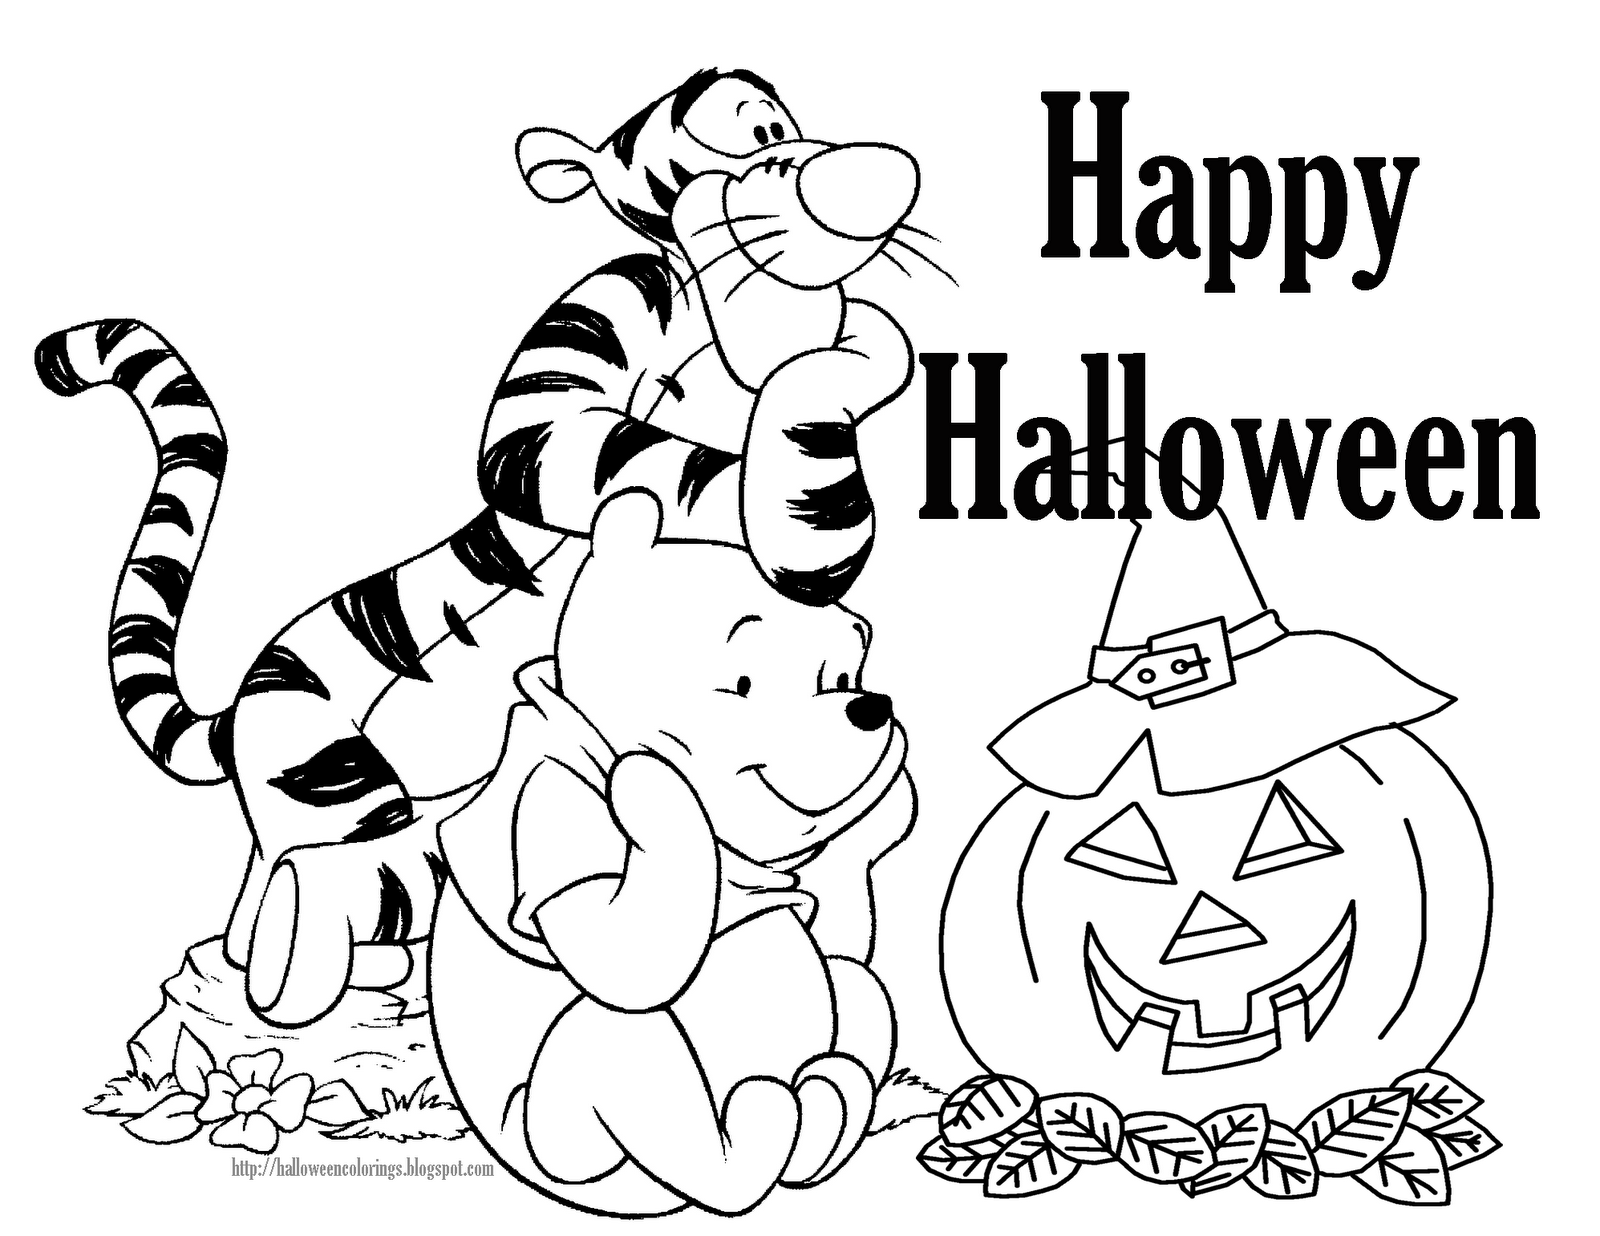 Download Halloween Coloring Pages - Free Printable - Minnesota Miranda